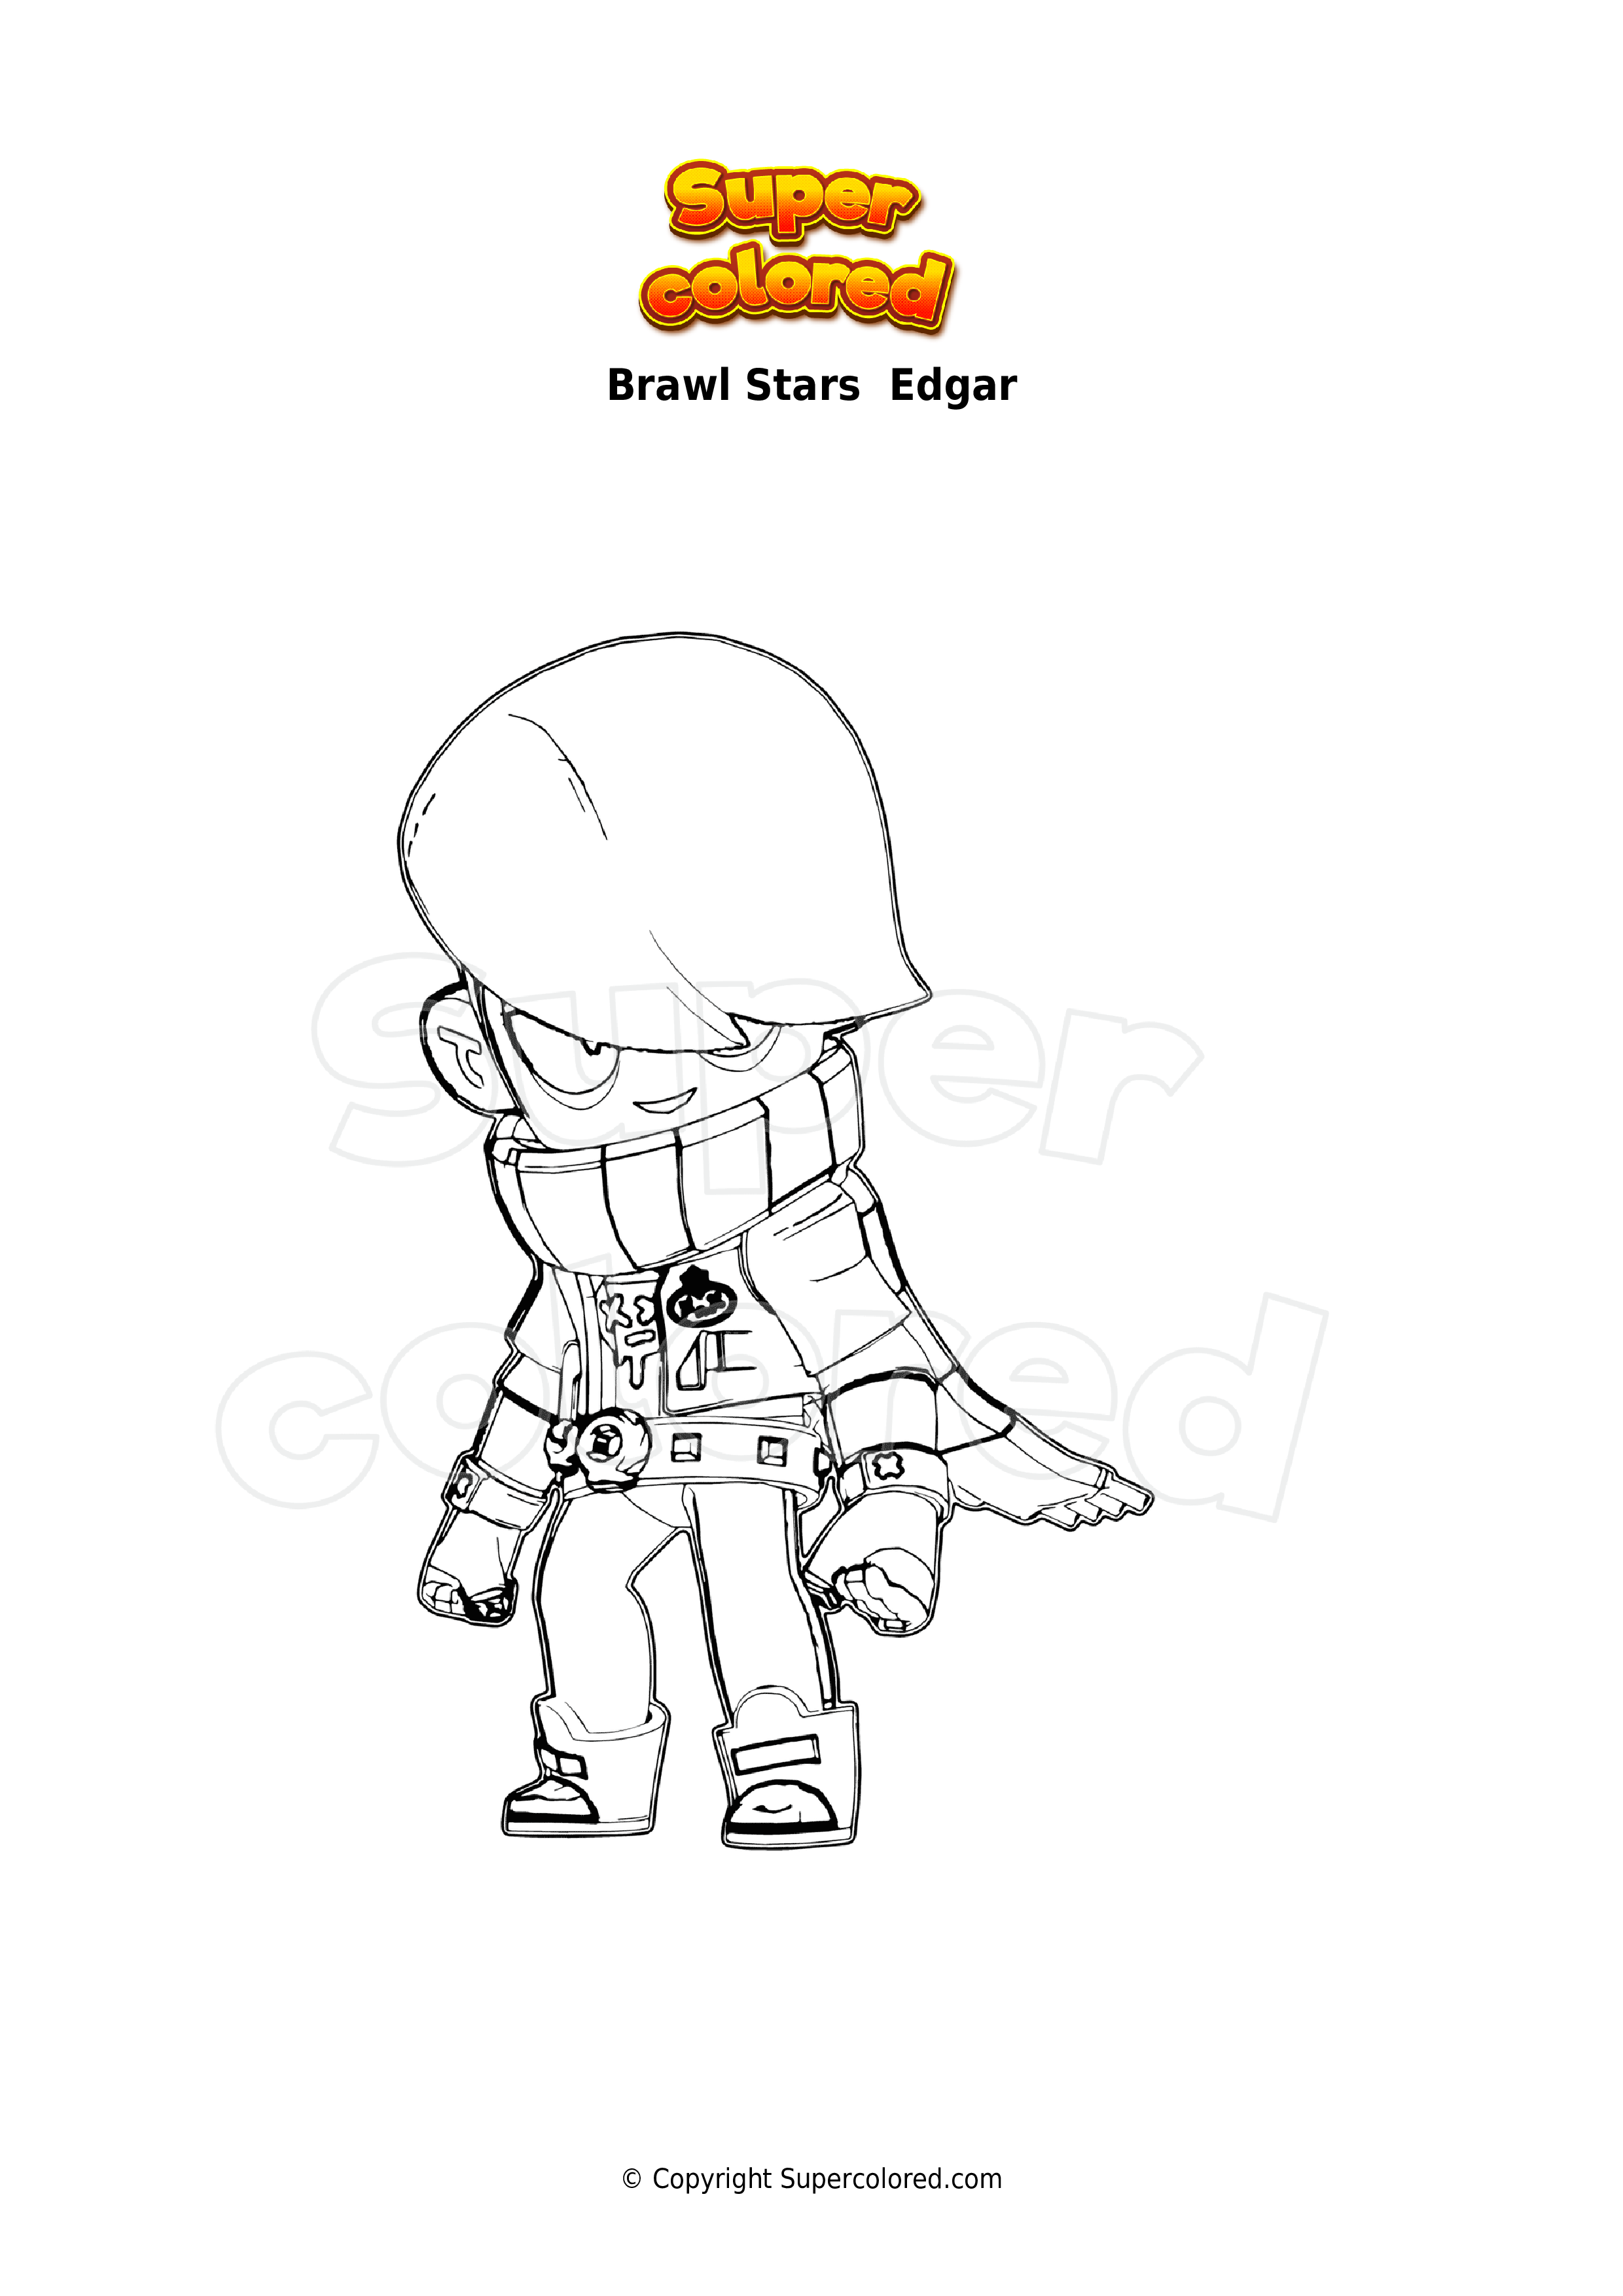 Dibujo Para Colorear Brawl Stars Edgar Supercolored Com - edgar brawl brawl stars para colorear